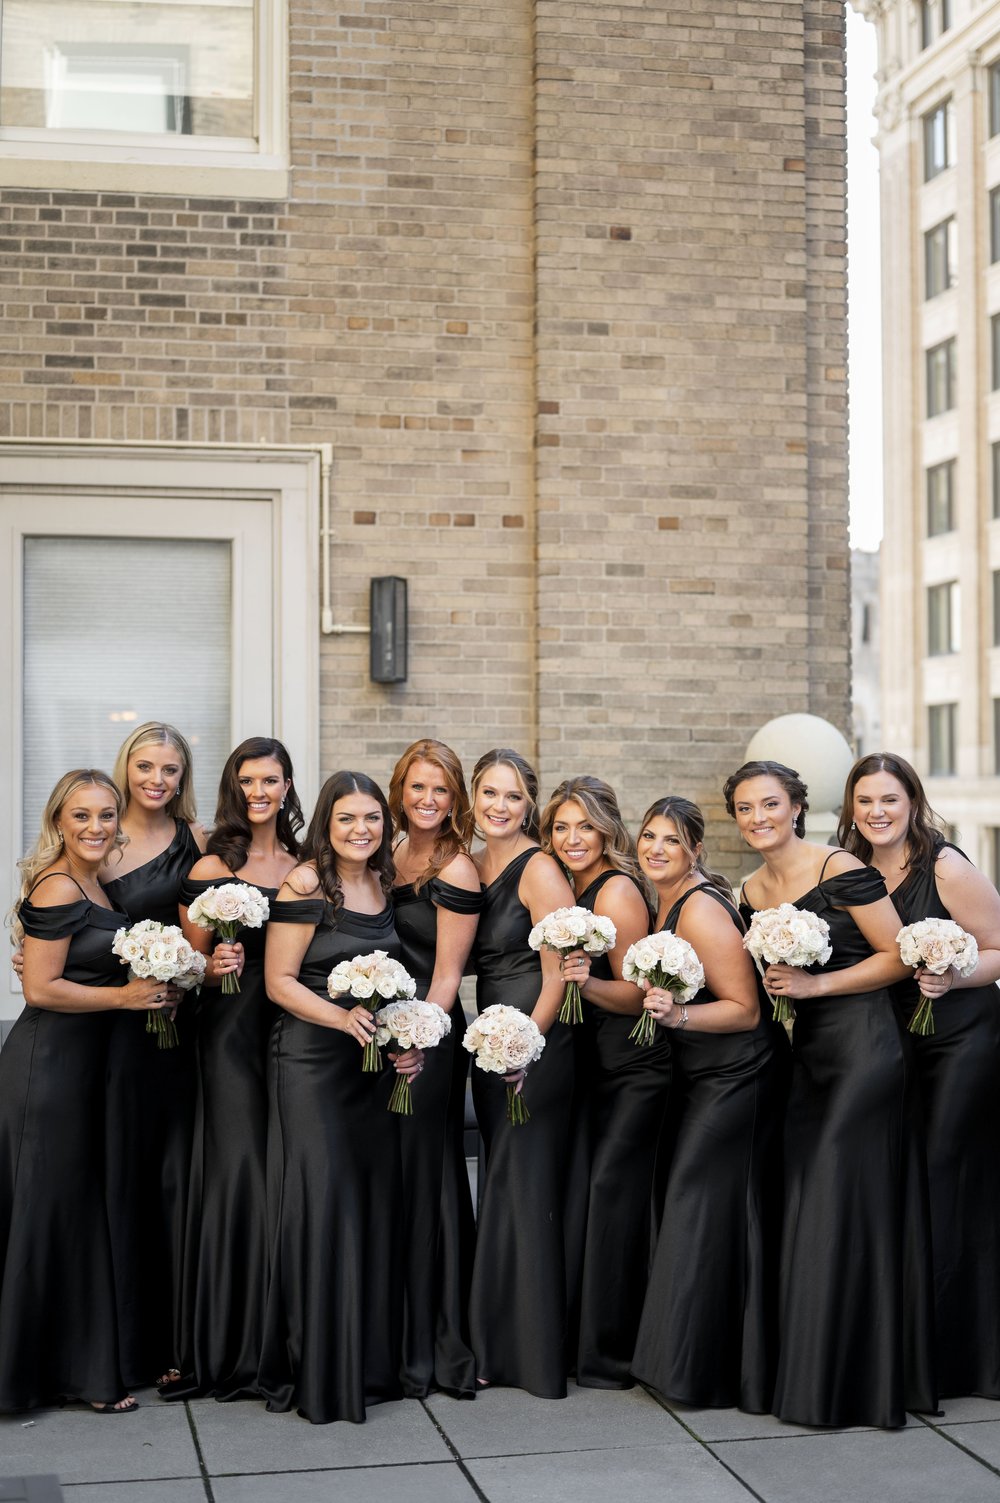 bridal party photos with bridesmaids